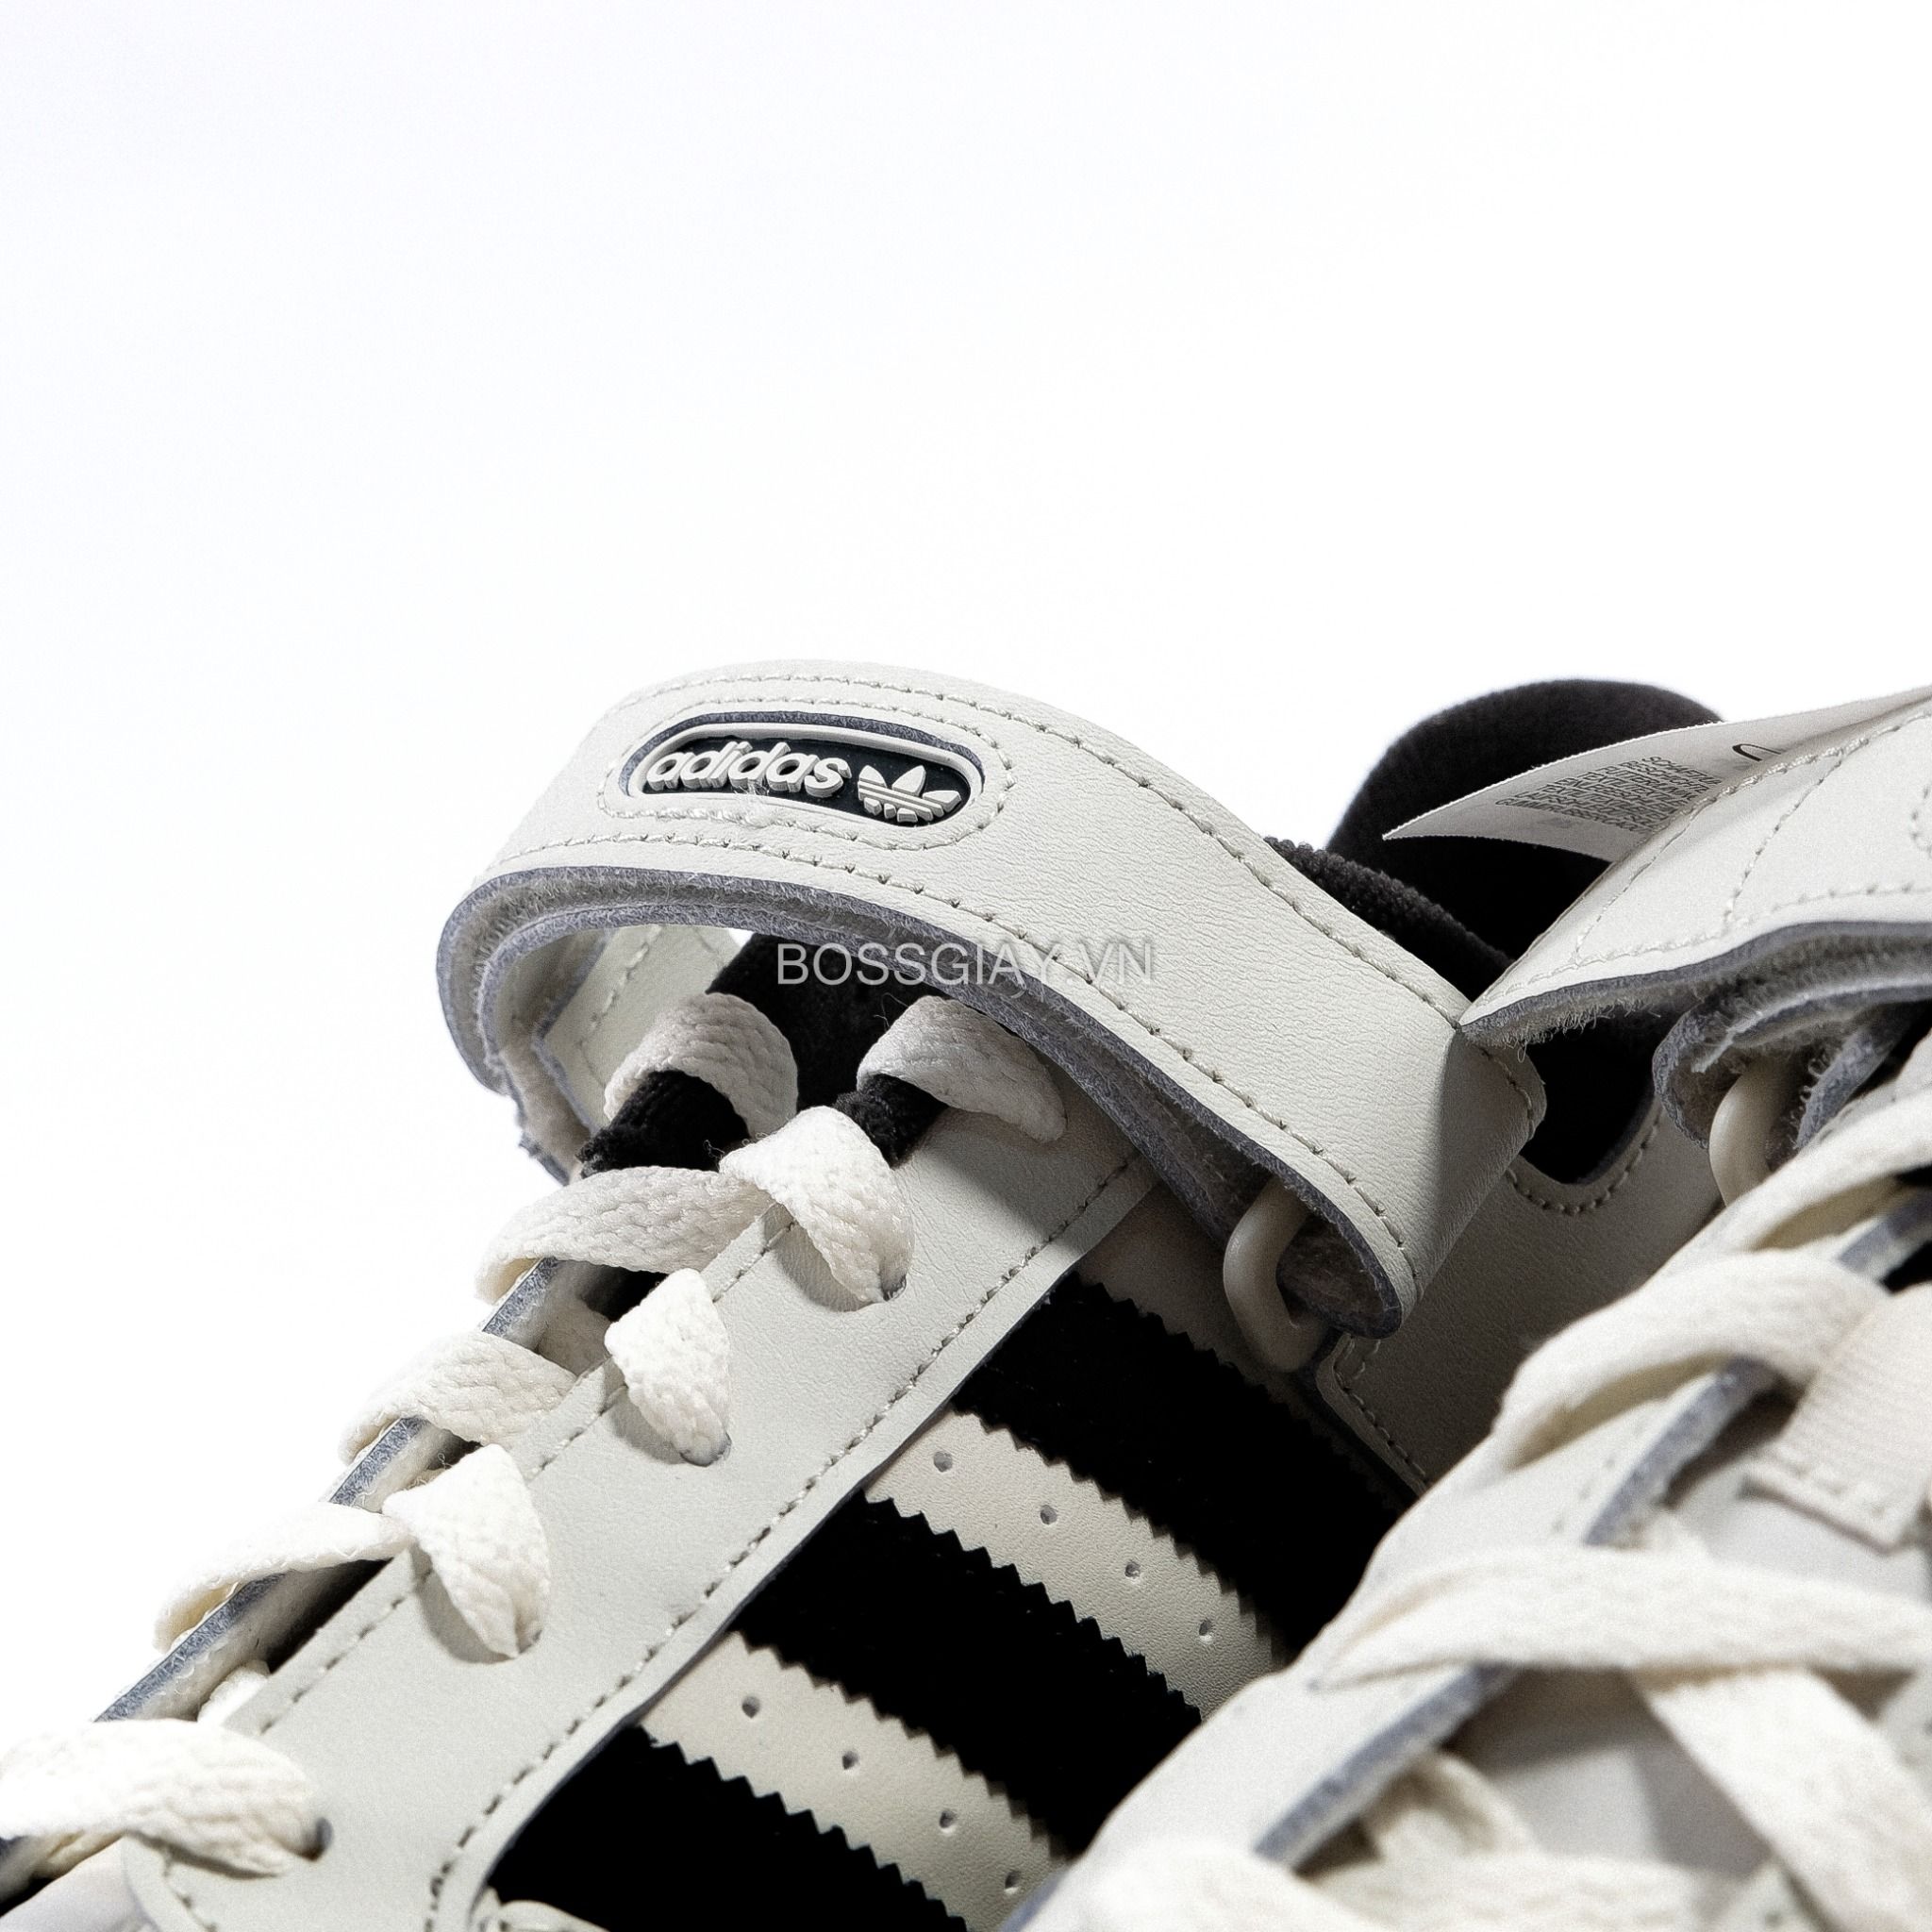  Adidas Forum Low White Black  IE7217 